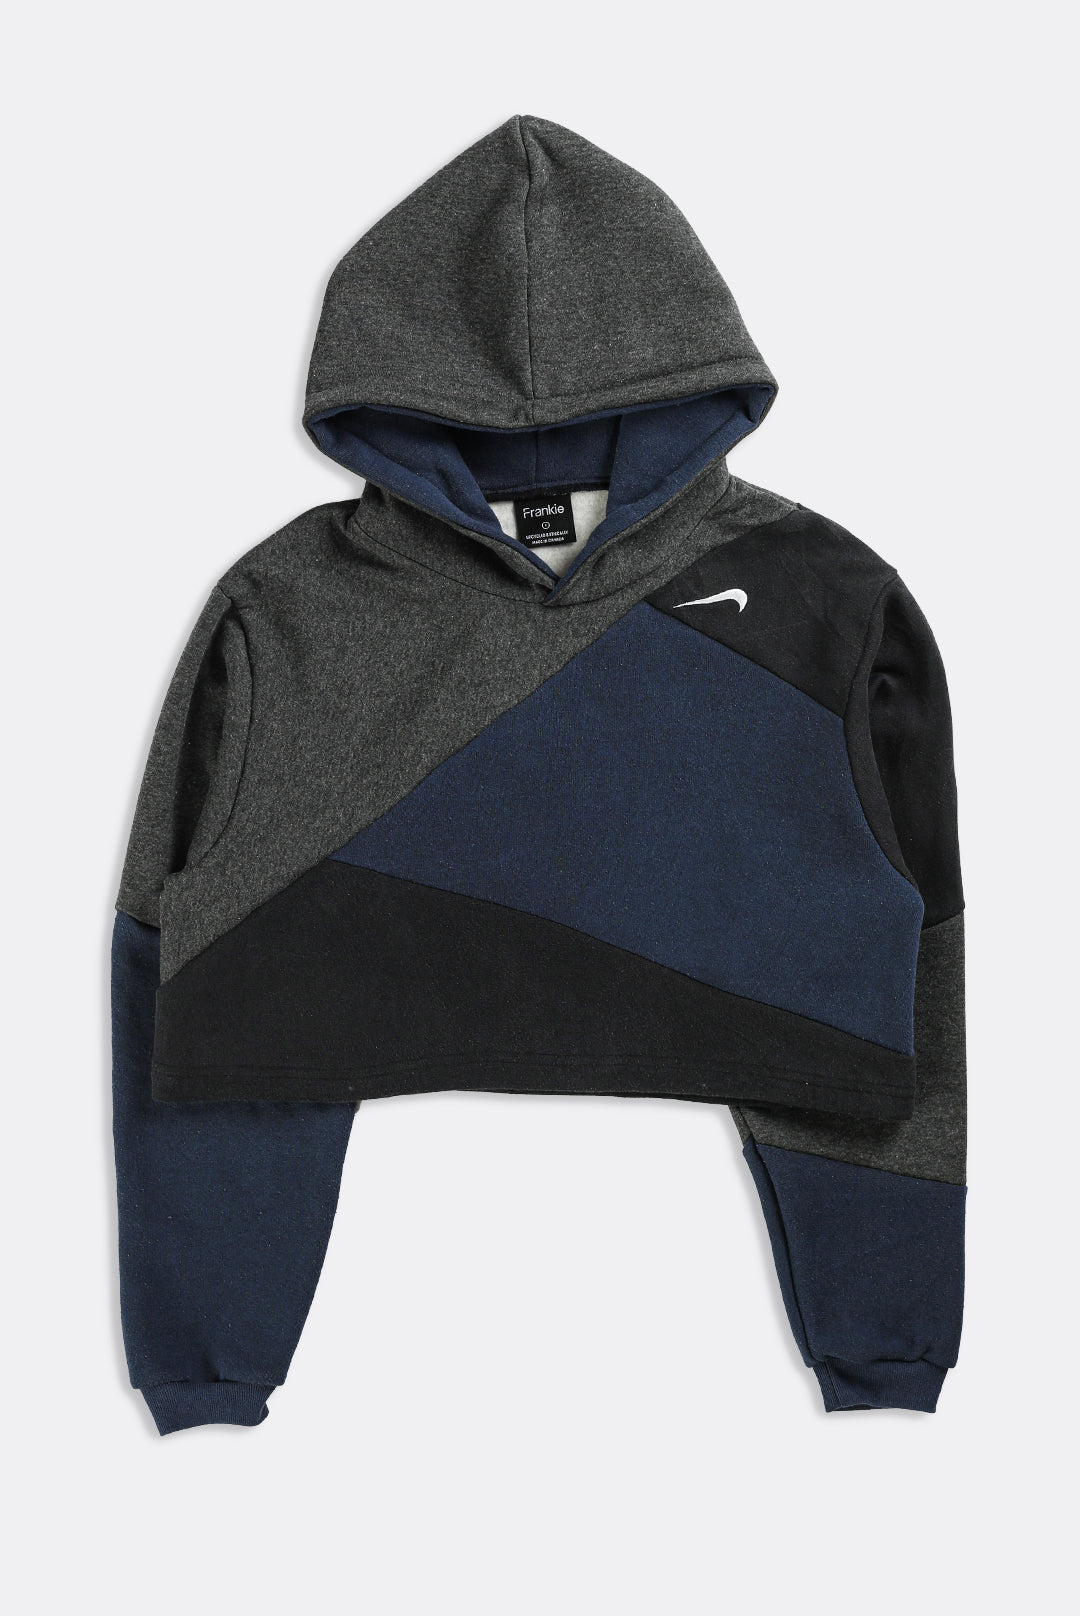 Rework Nike Patchwork Crop Sweatshirt - S – Frankie Collective